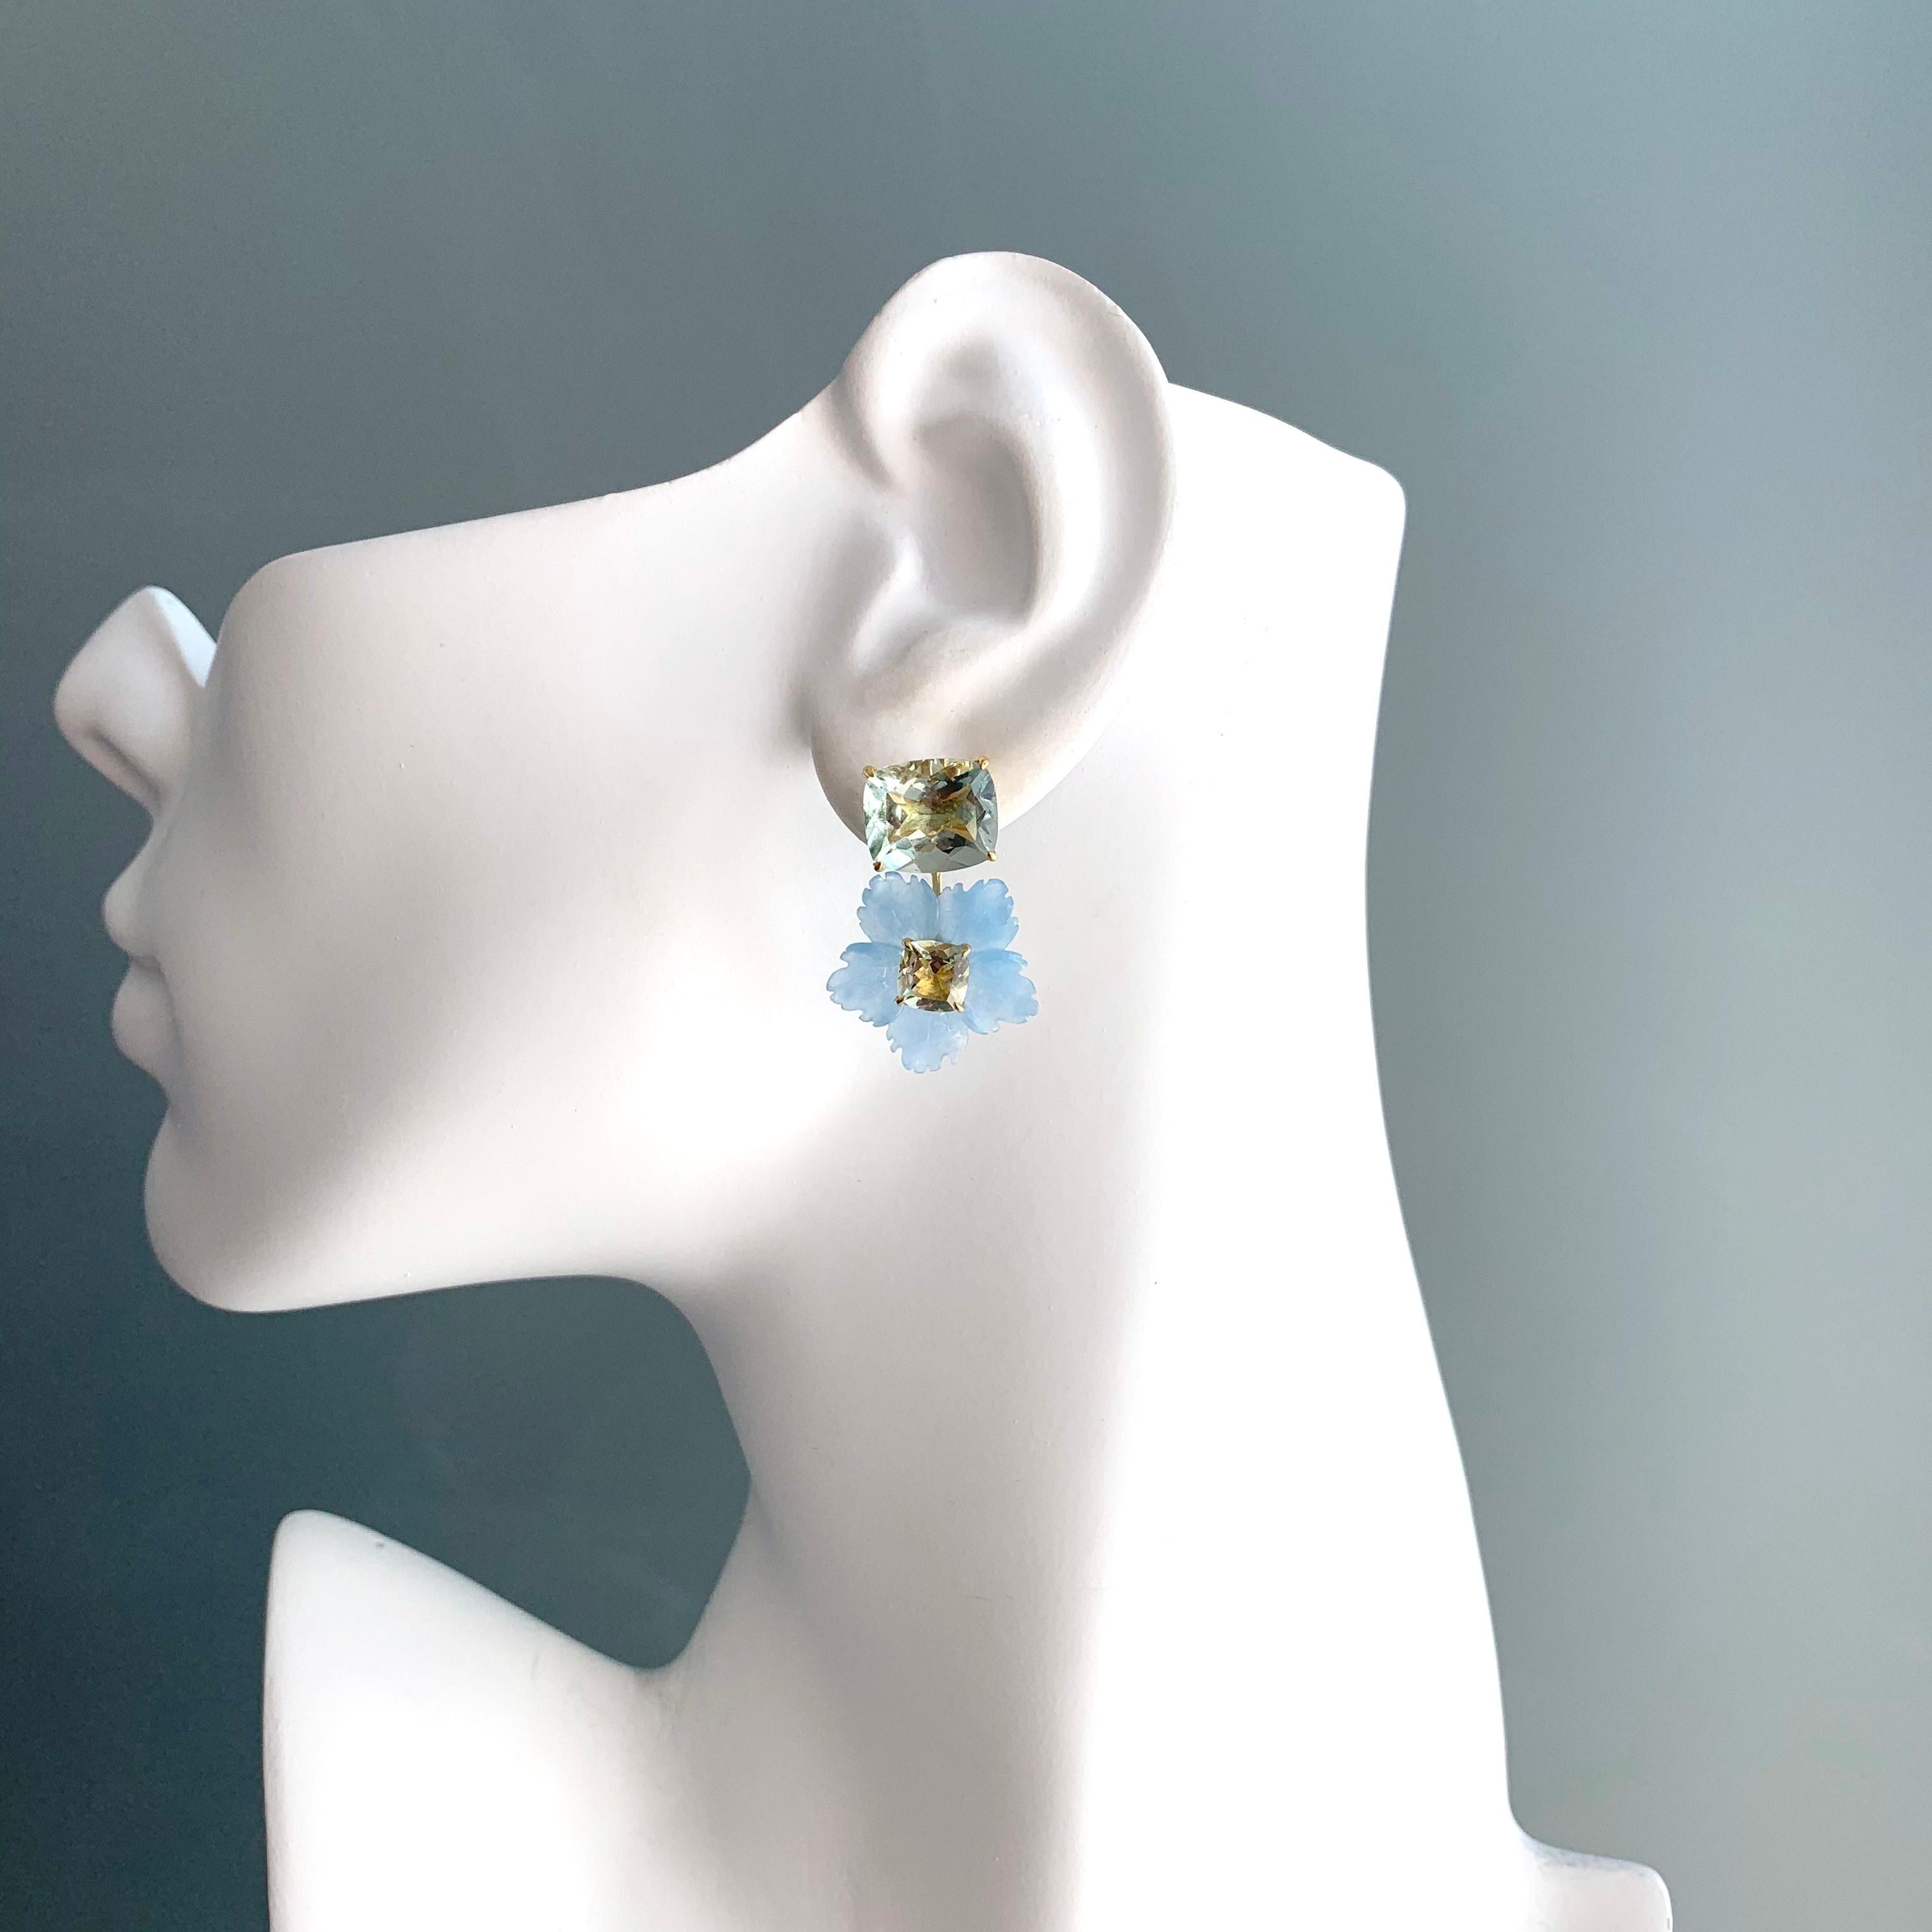 Bijoux Num's Cushion-cut Prasiolite and Carved Blue Quartzite Flower Drop Earrings

This gorgeous pair of earrings features beautiful cushion-cut prasiolite 